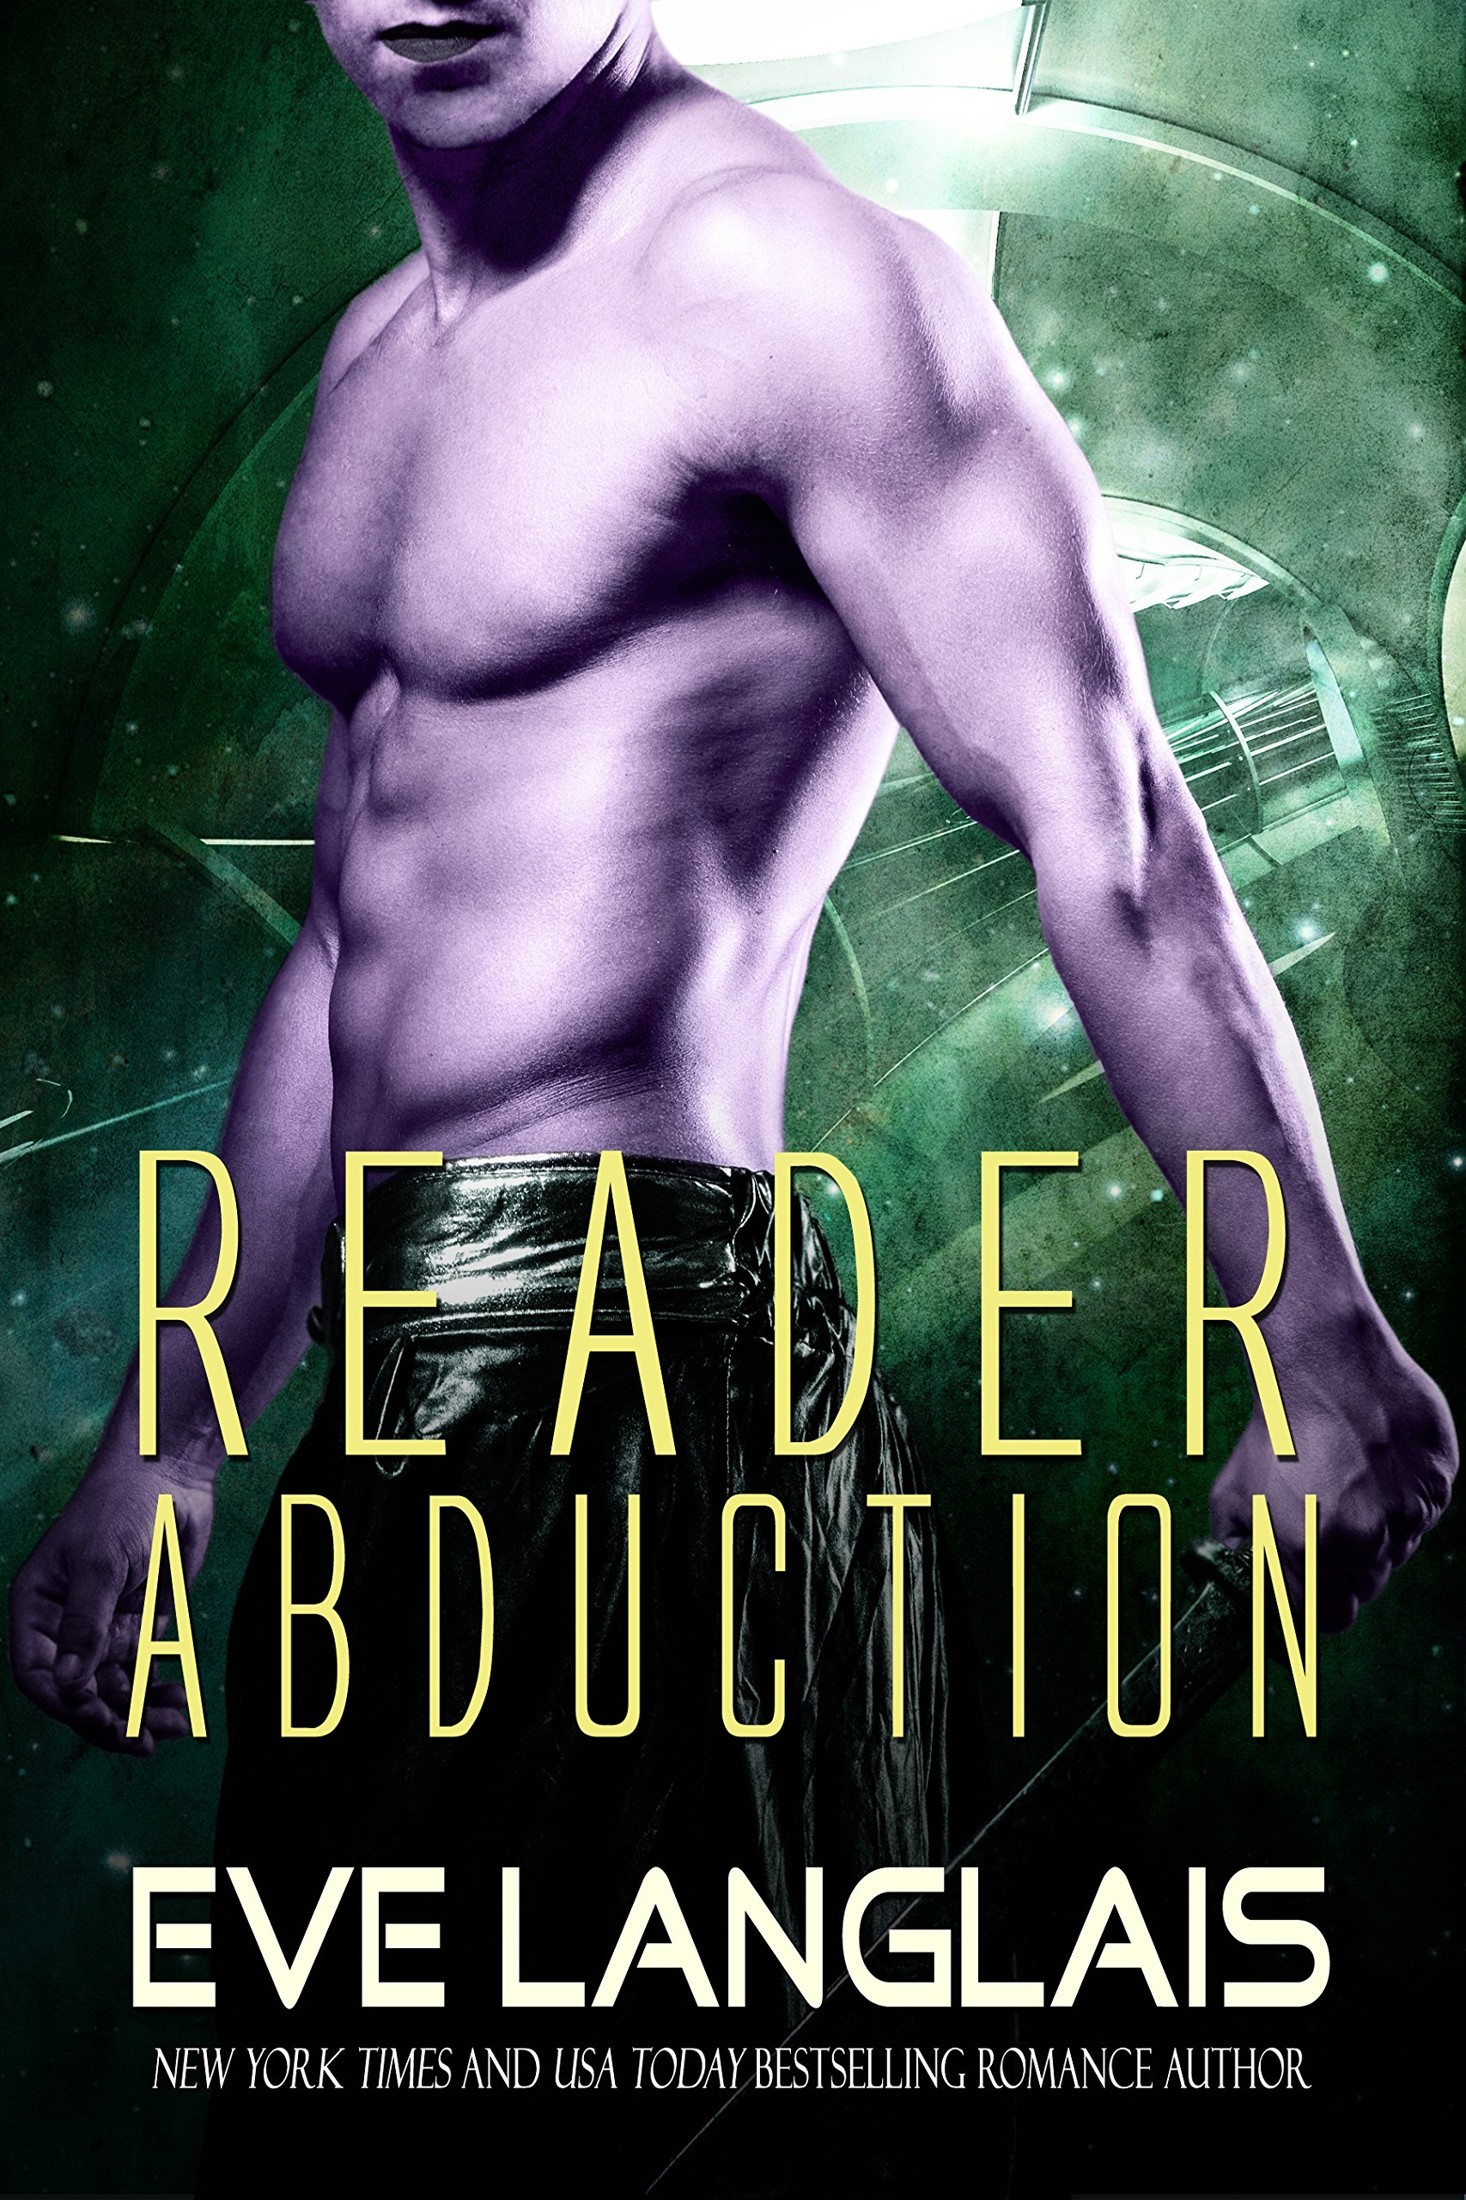 Reader Abduction (Alien Abduction Book 7) by Eve Langlais